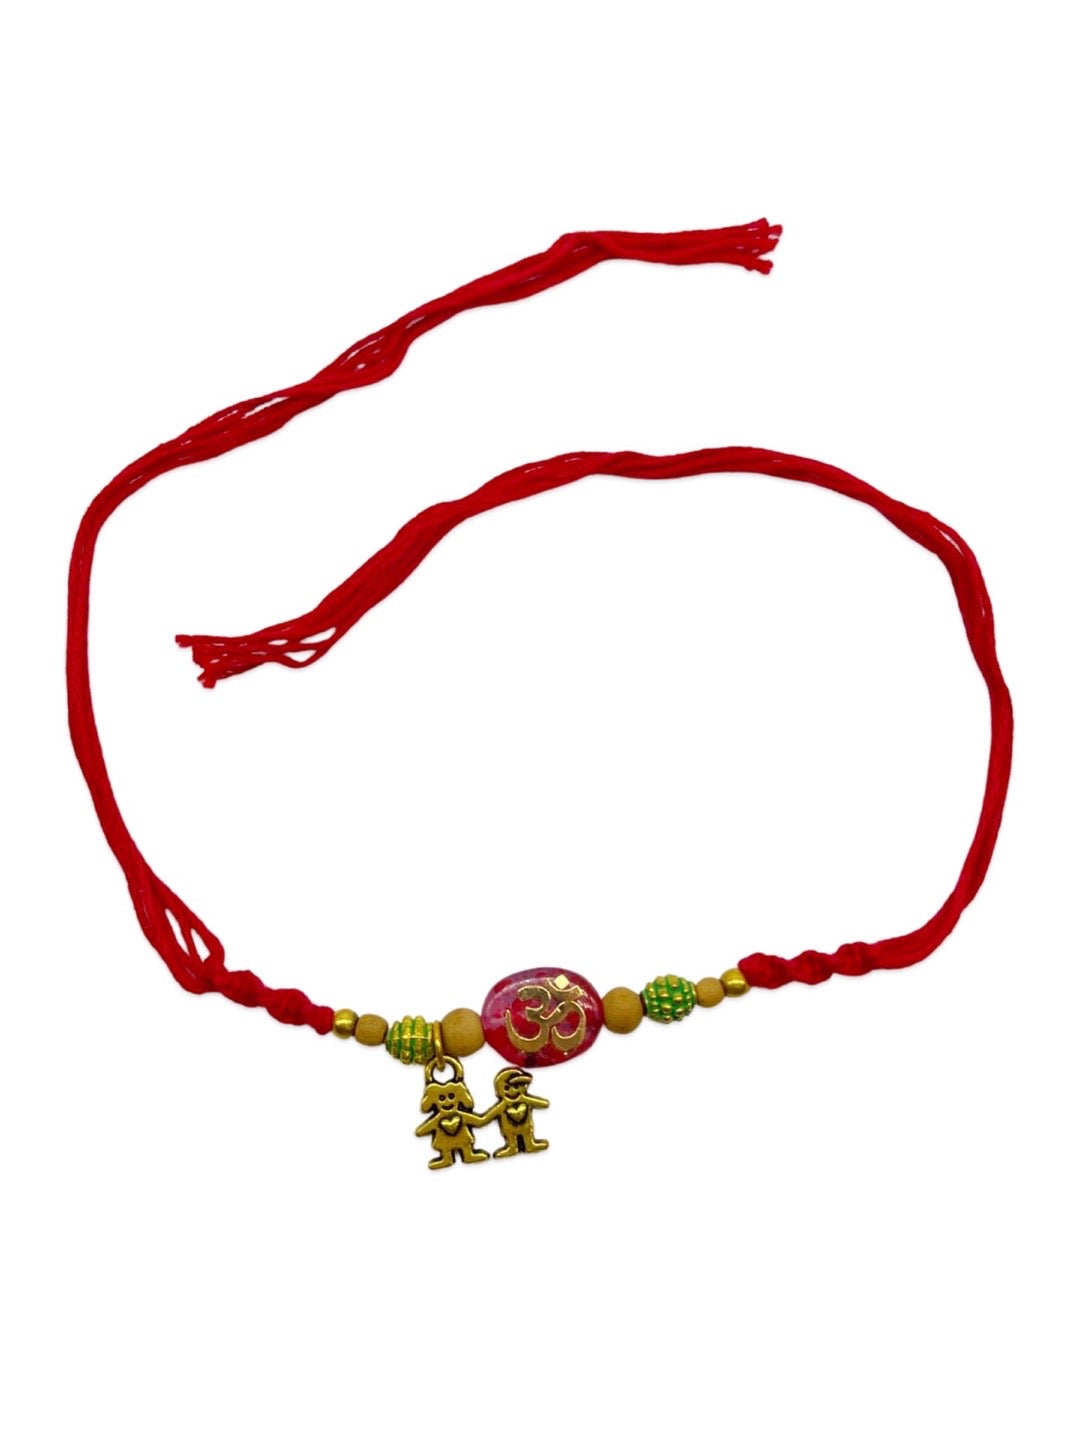 Beautiful Stone Work Bracelet Rakhi: Gift/Send Rakhi Gifts Online J11029495  |IGP.com